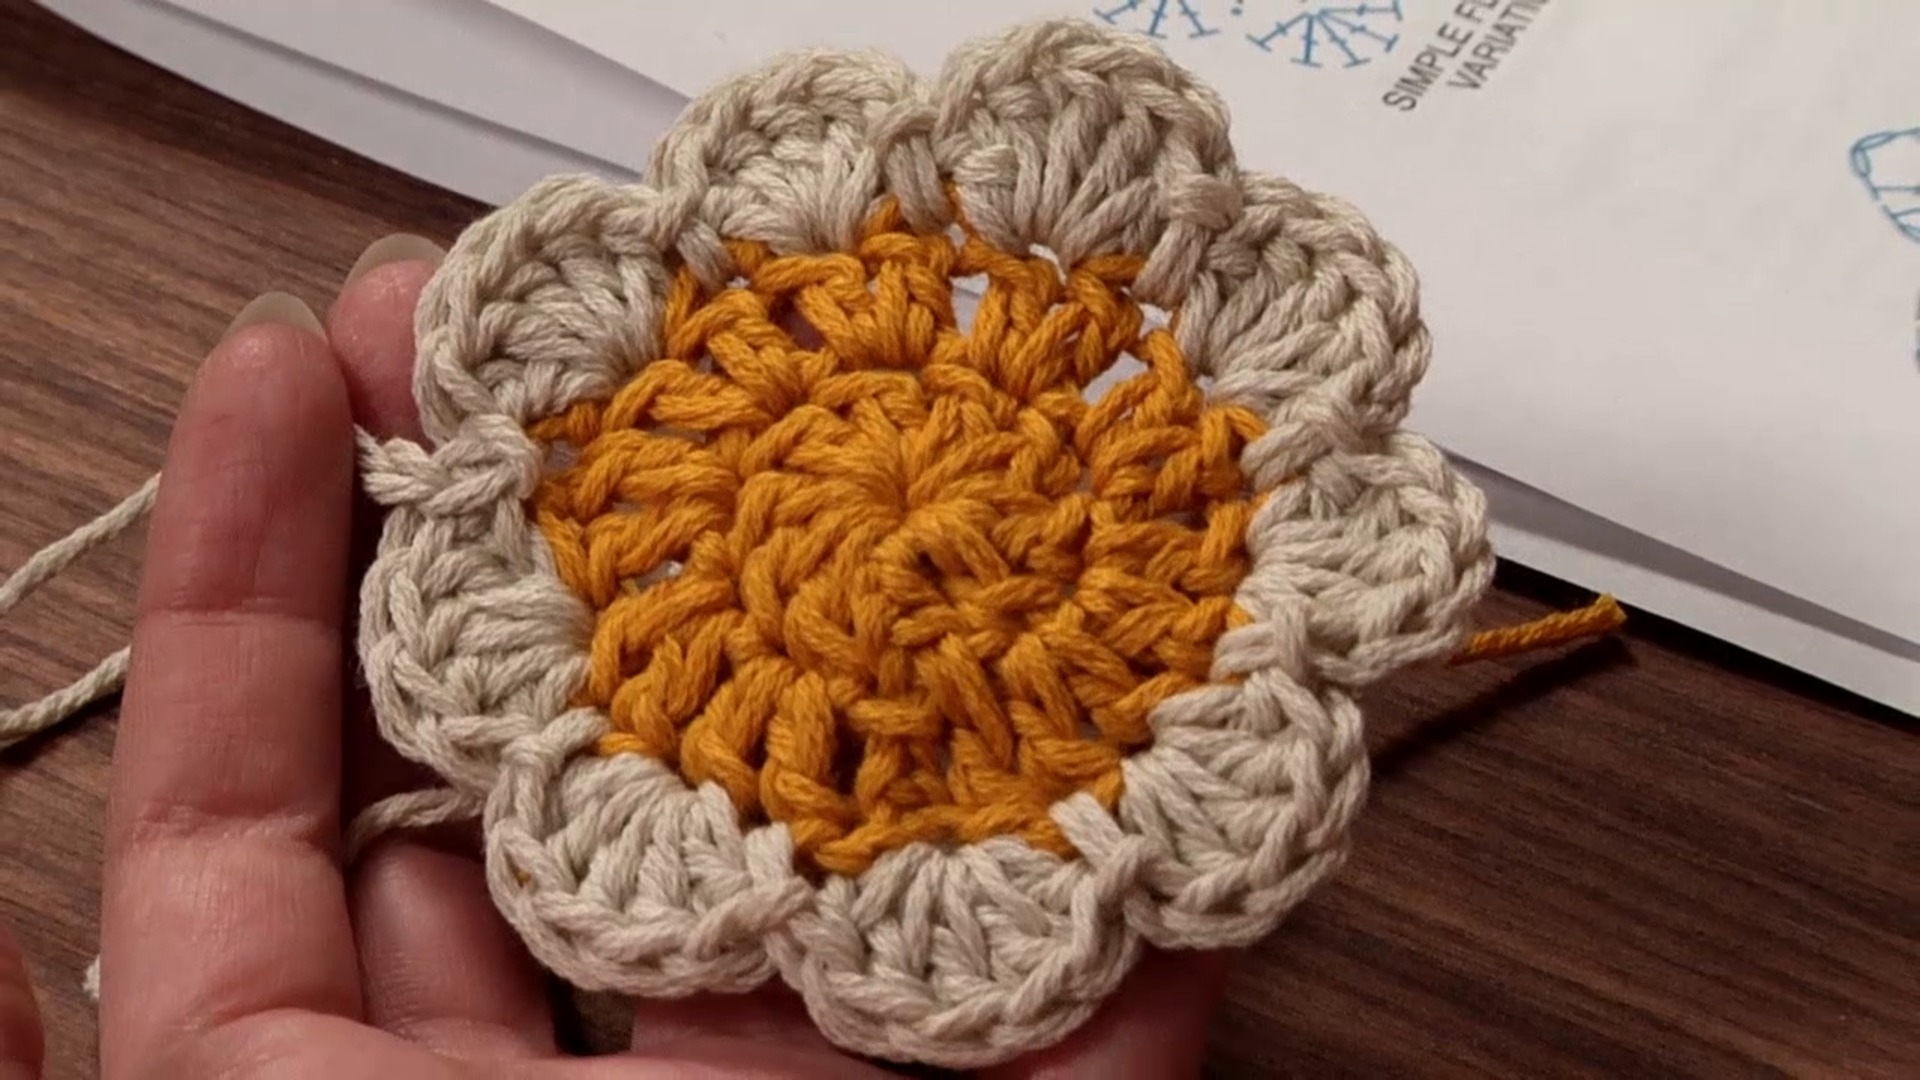 Finishing Your Crochet Work